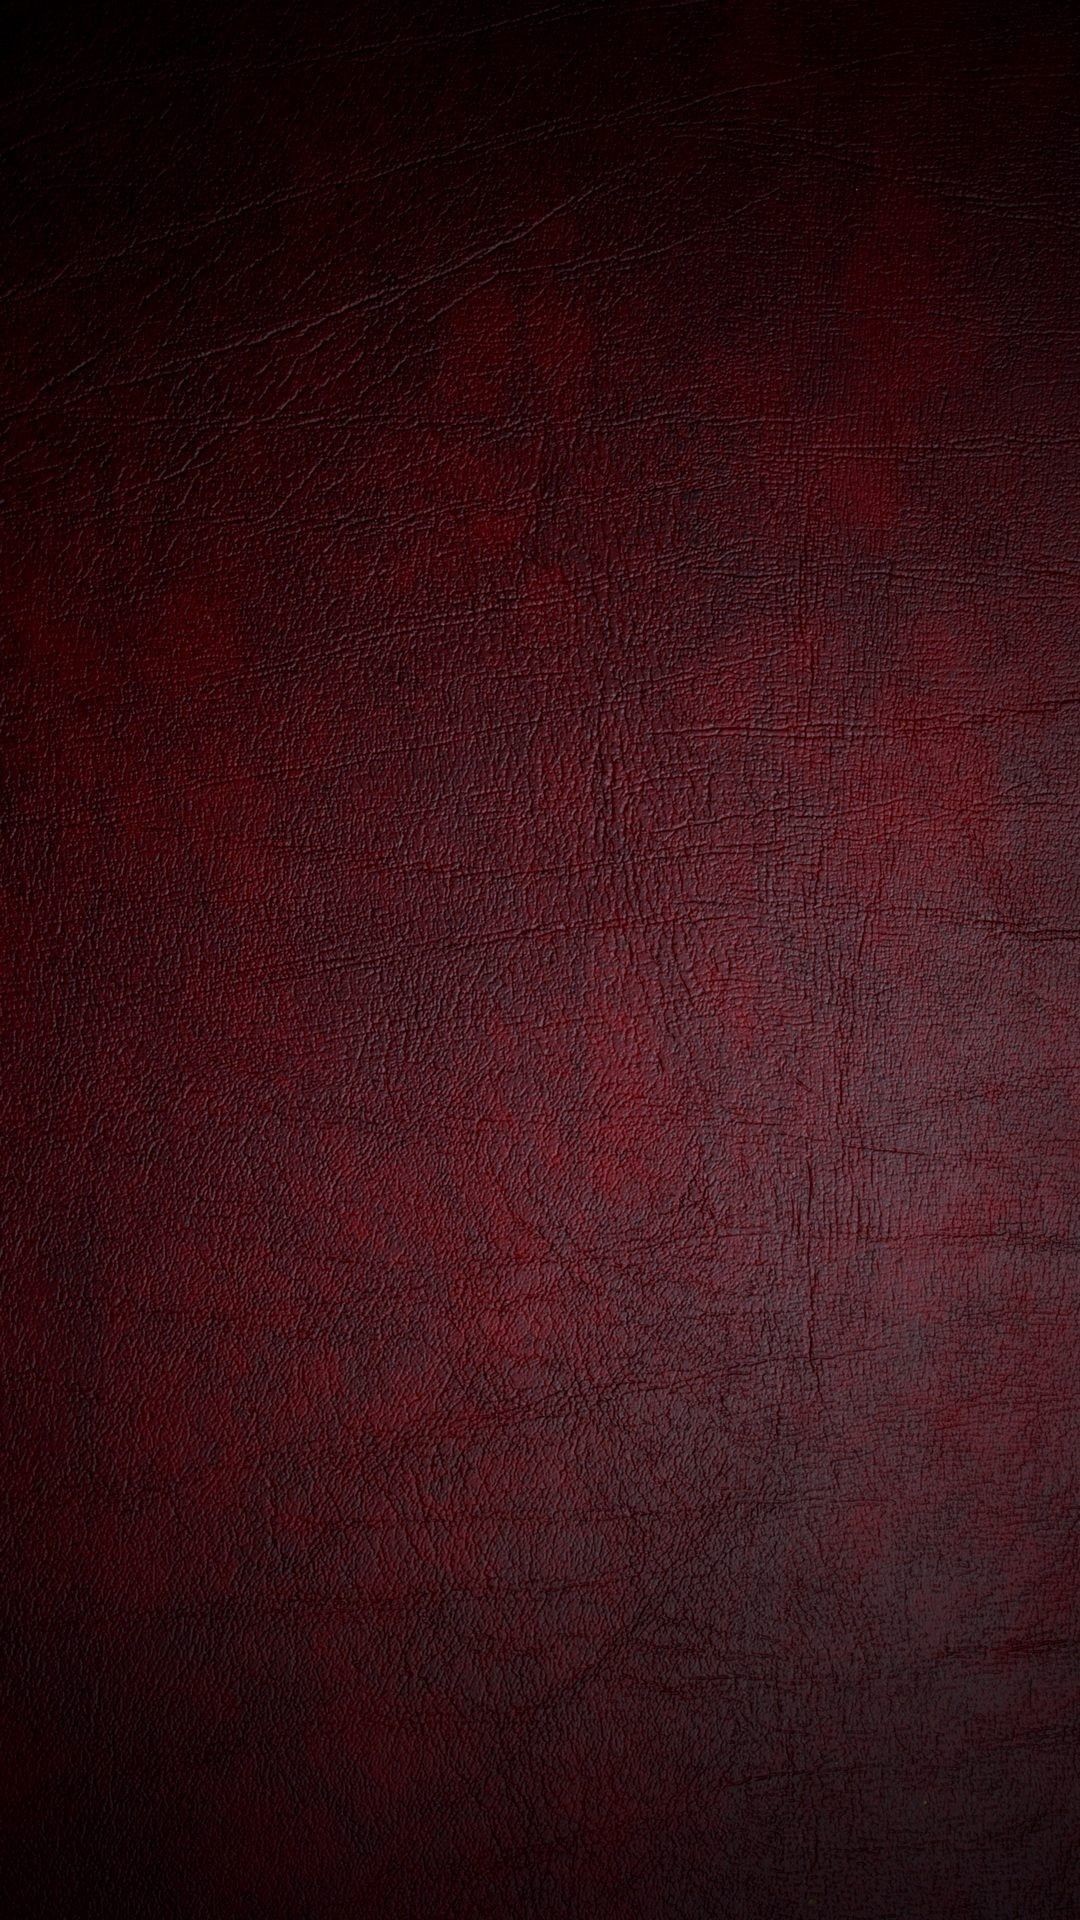 1080x1920  Wallpapers For > Red And Black Wallpaper Hd Iphone |  iPhone6PlusÃ¥Â£ Ã§Â´â¢ .